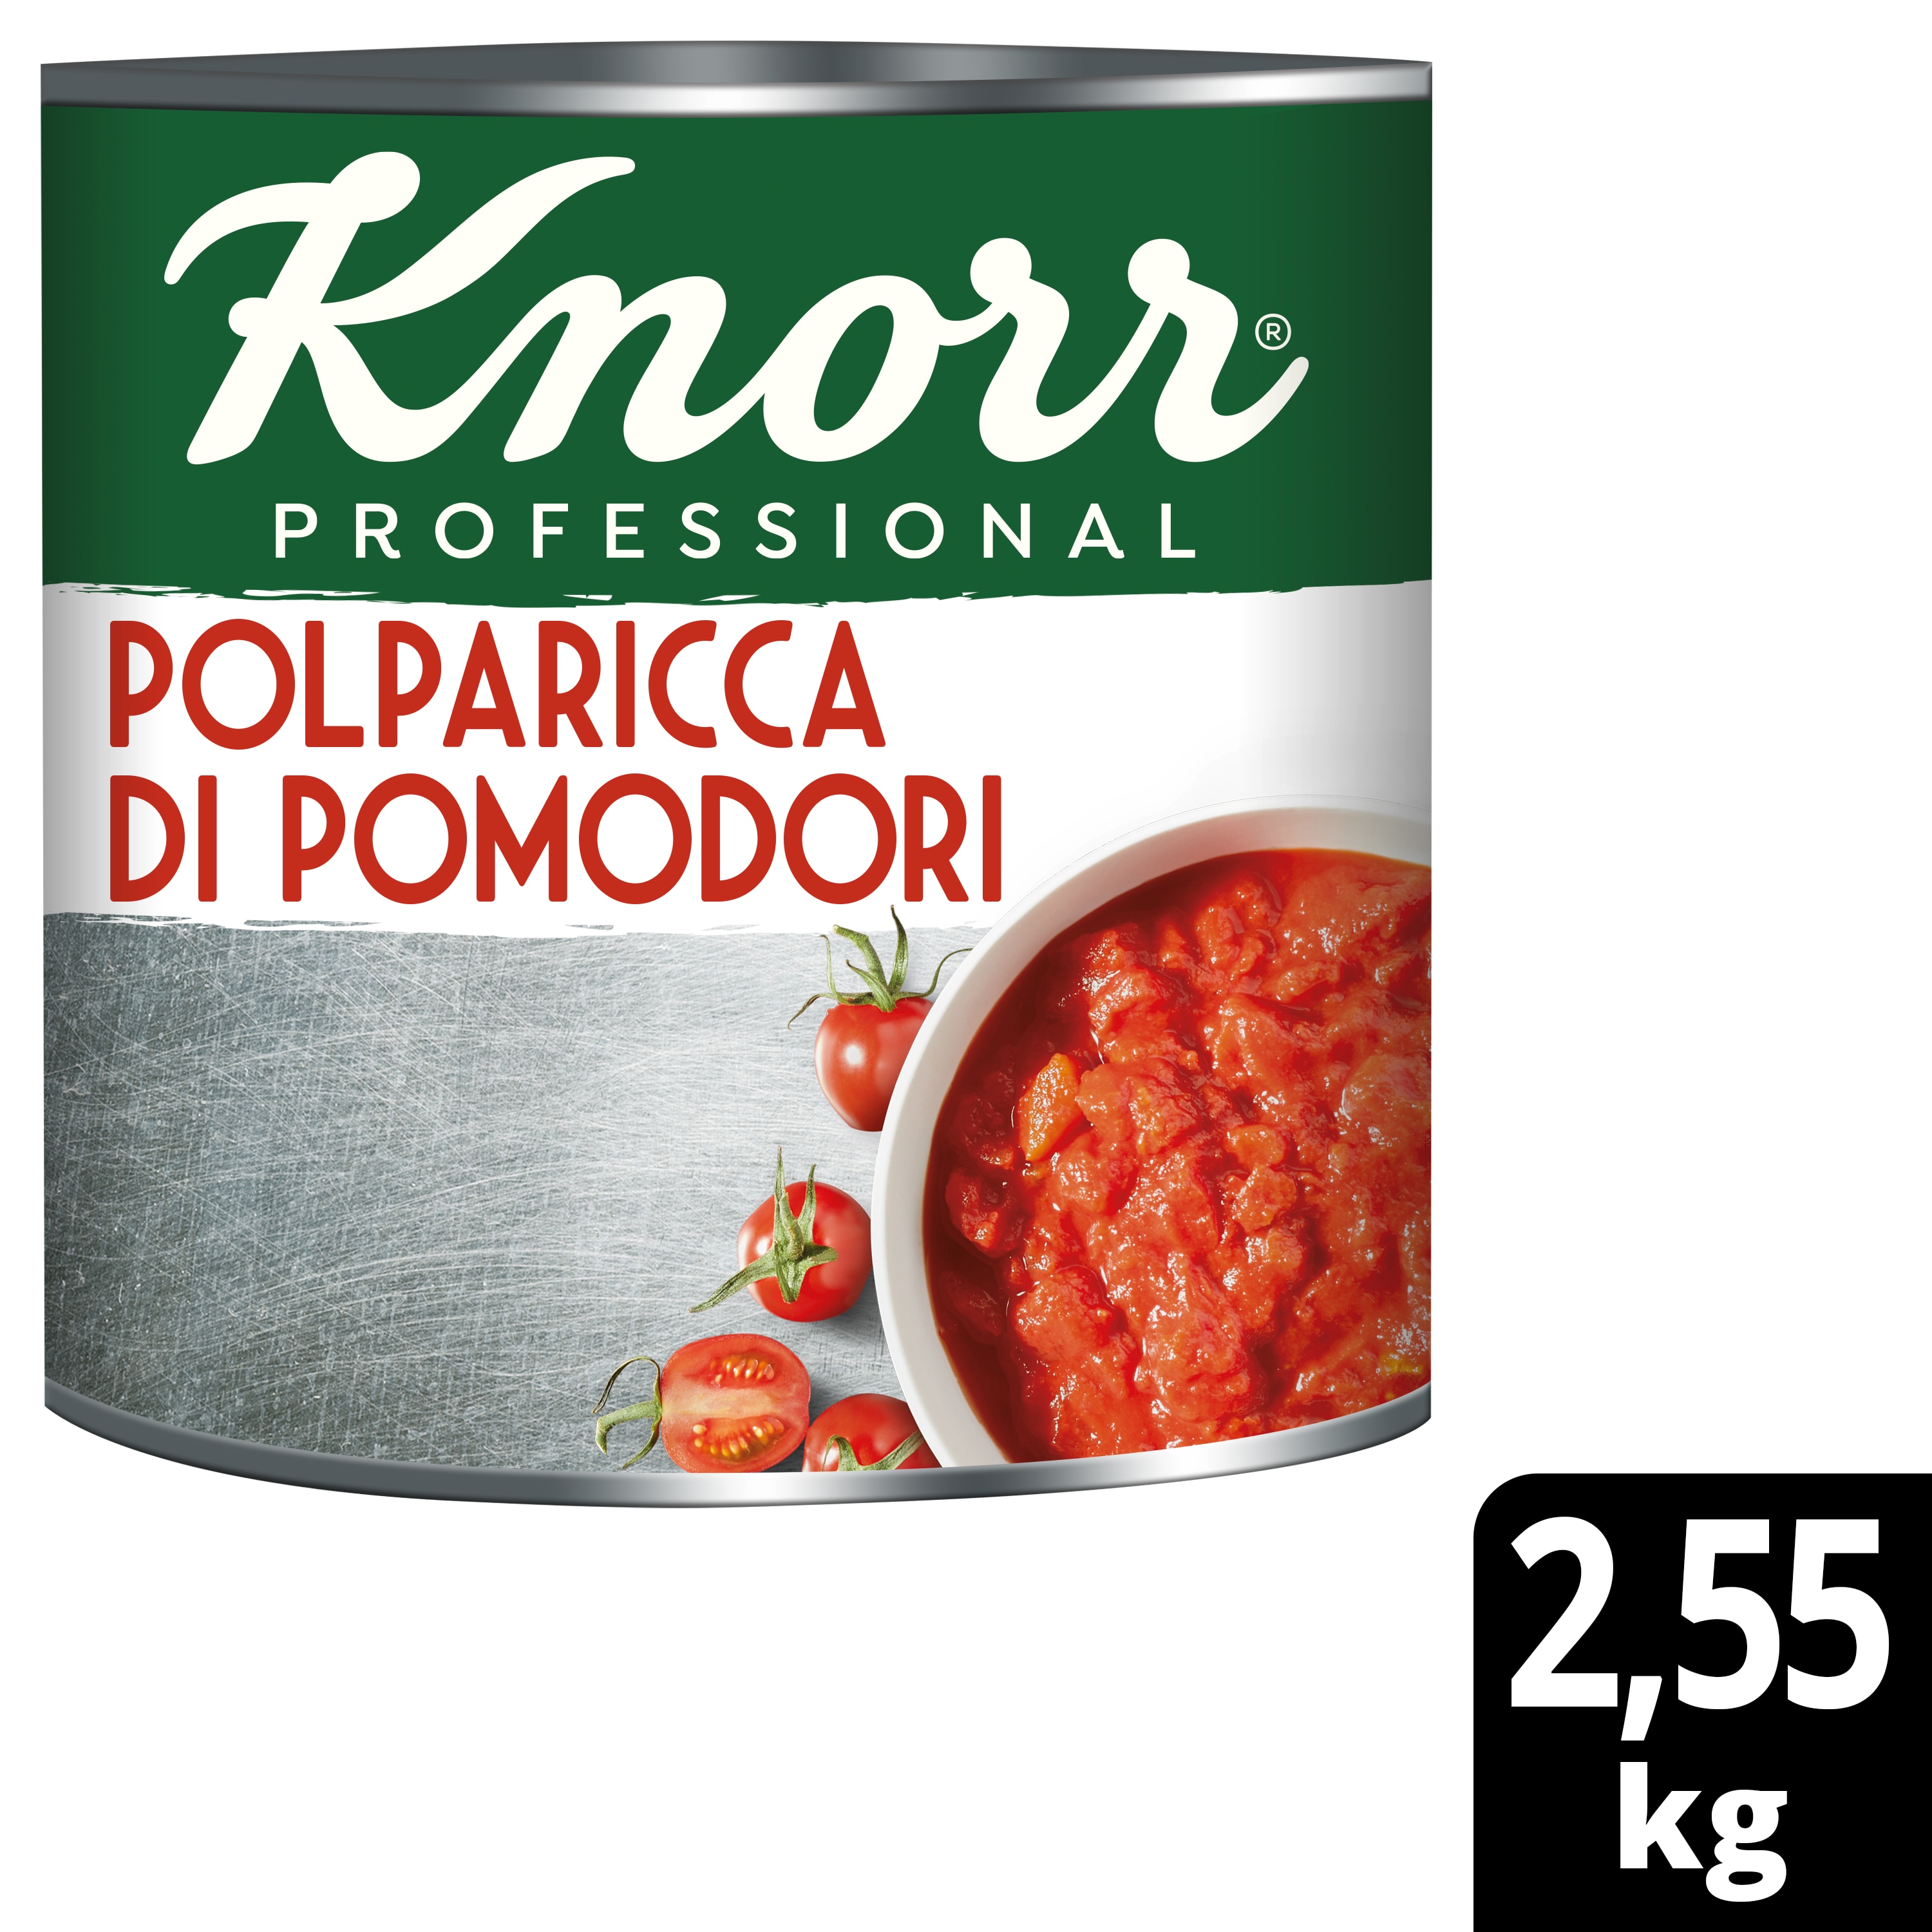 Knorr Professional Italiana Polparicca di Pomodoro 2,55kg - 